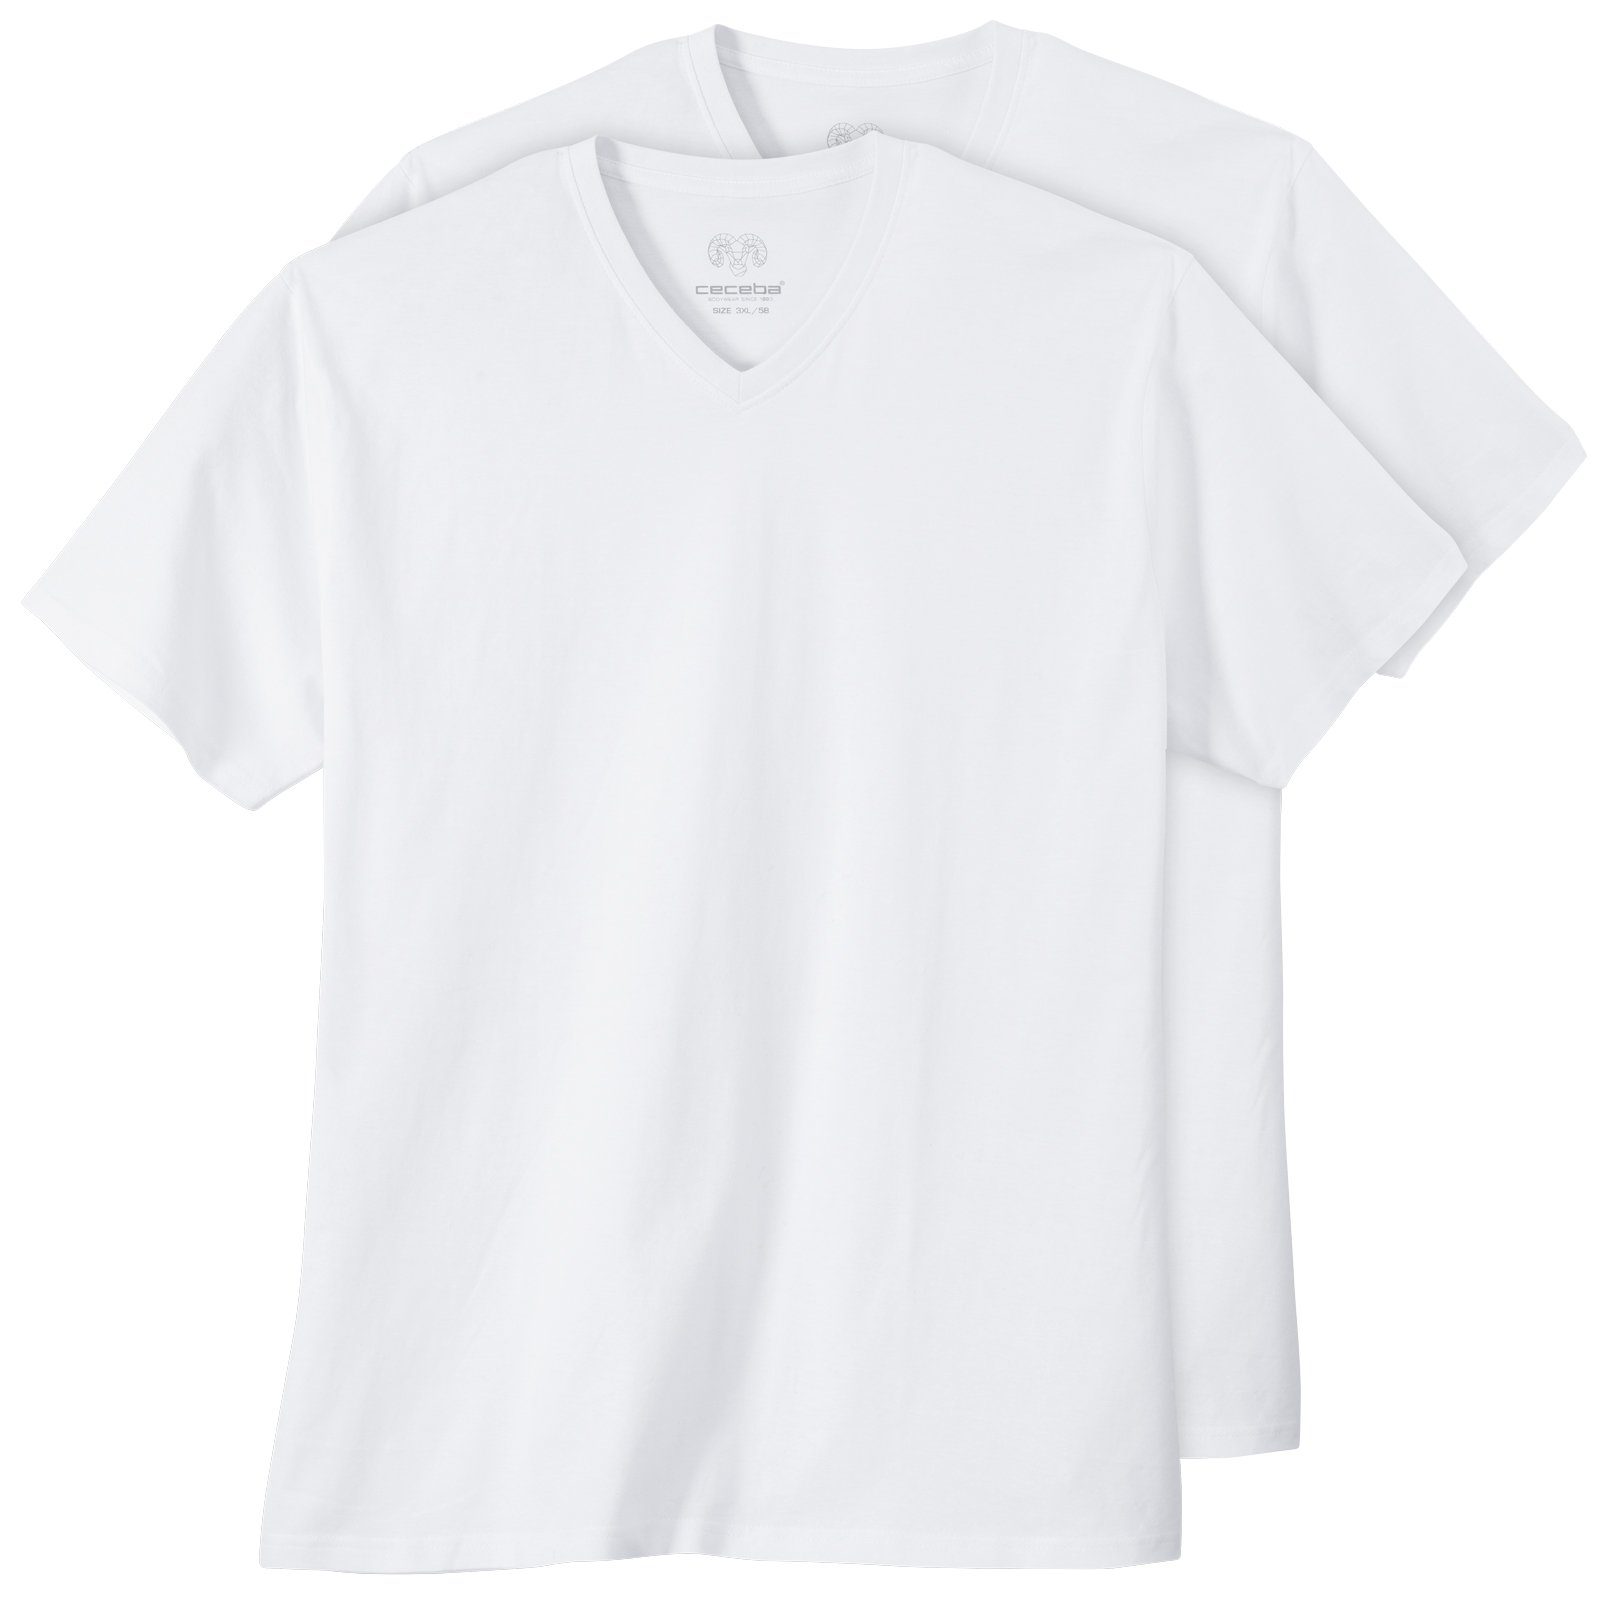 V-Neck Größen V-Shirt Ceceba weiß 2er-Pack Herren Große T-Shirt CECEBA